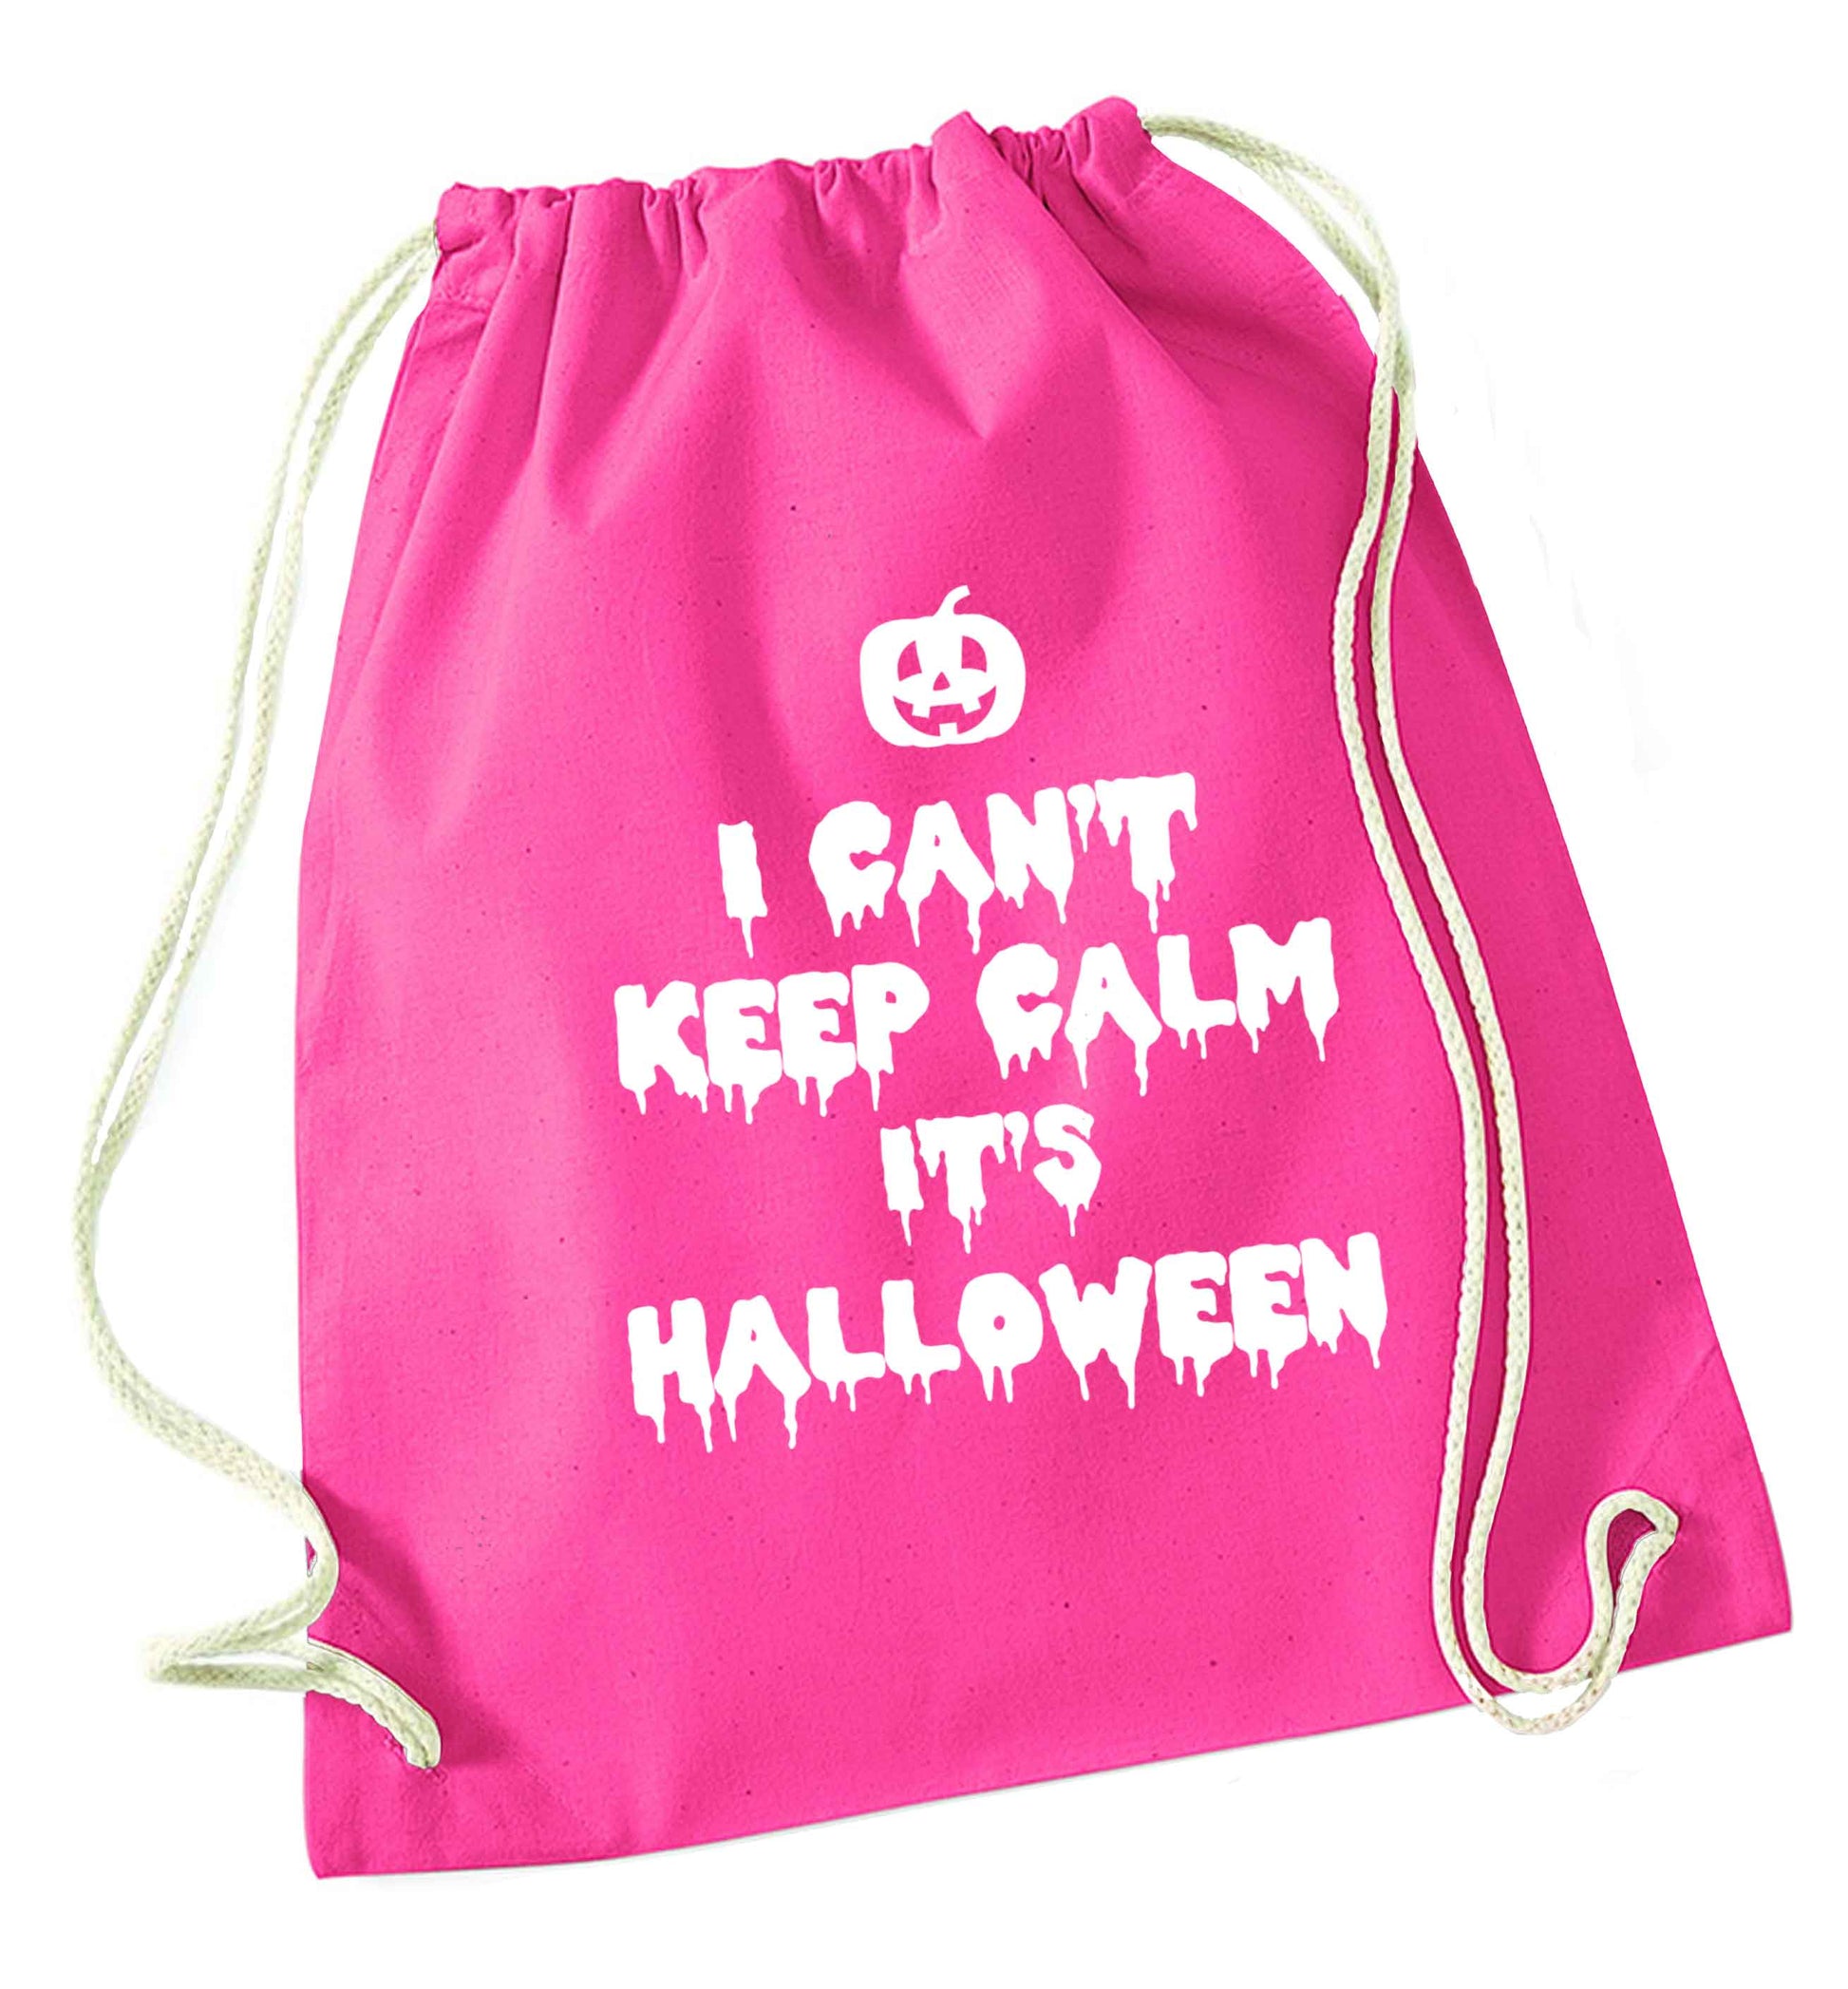 I can't keep calm it's halloween pink drawstring bag